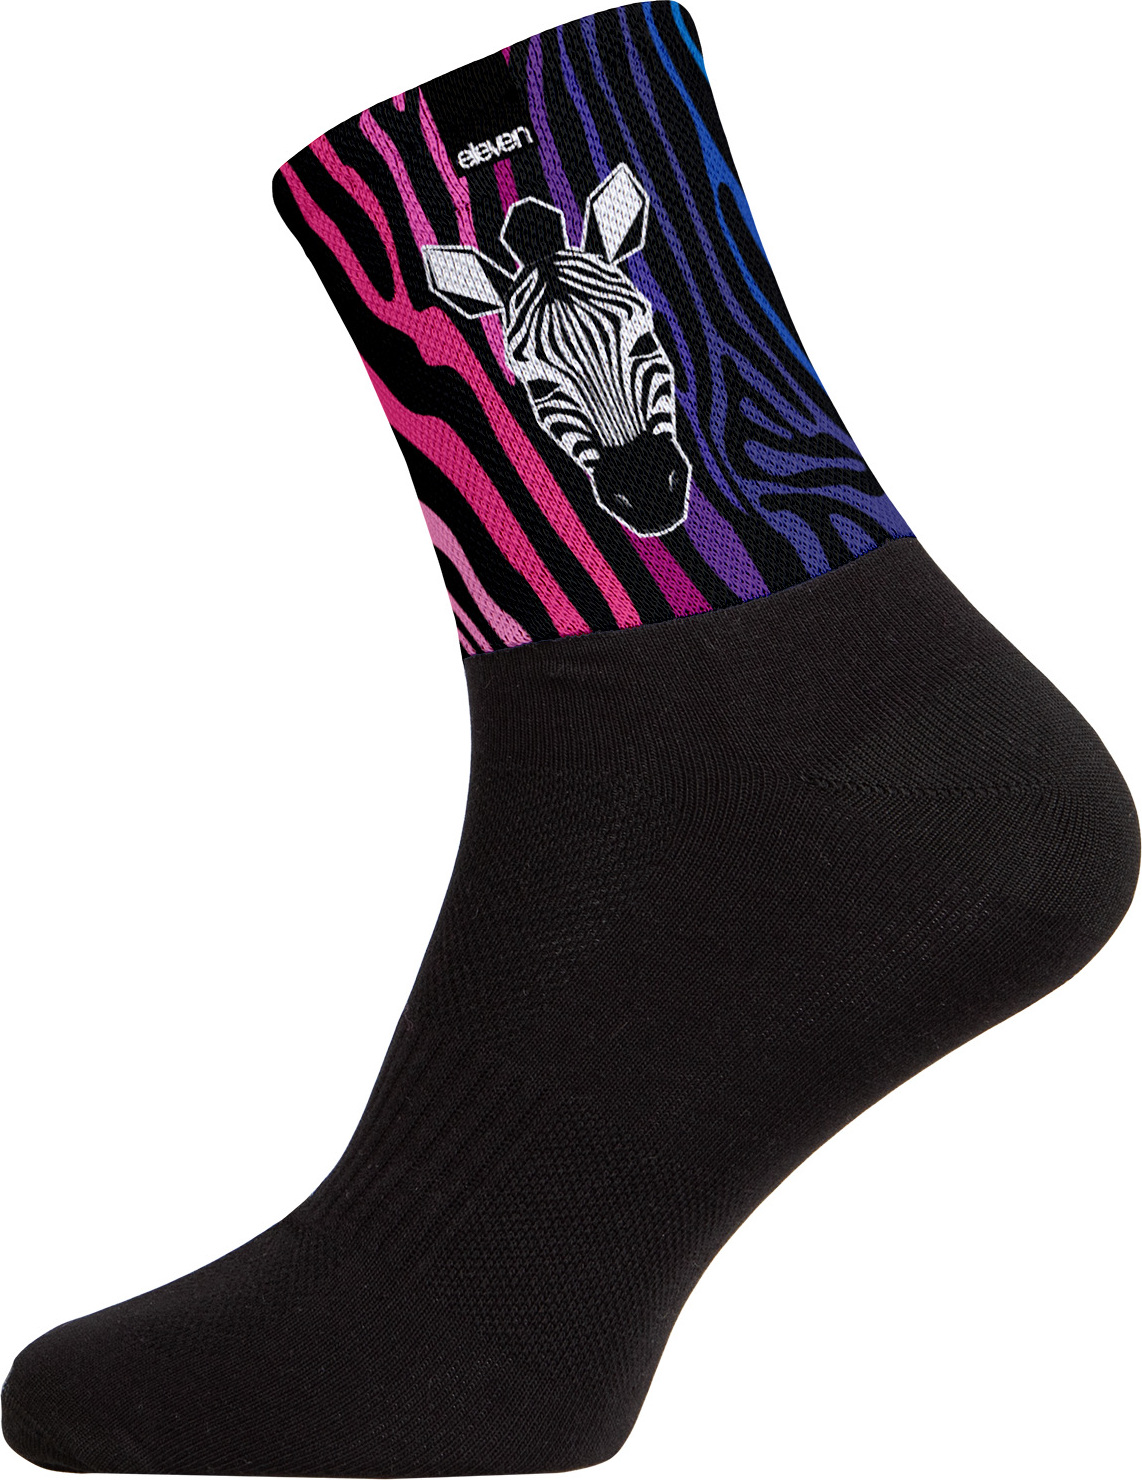 Ponožky ELEVEN Cuba Zebra Velikost: S (36-38)